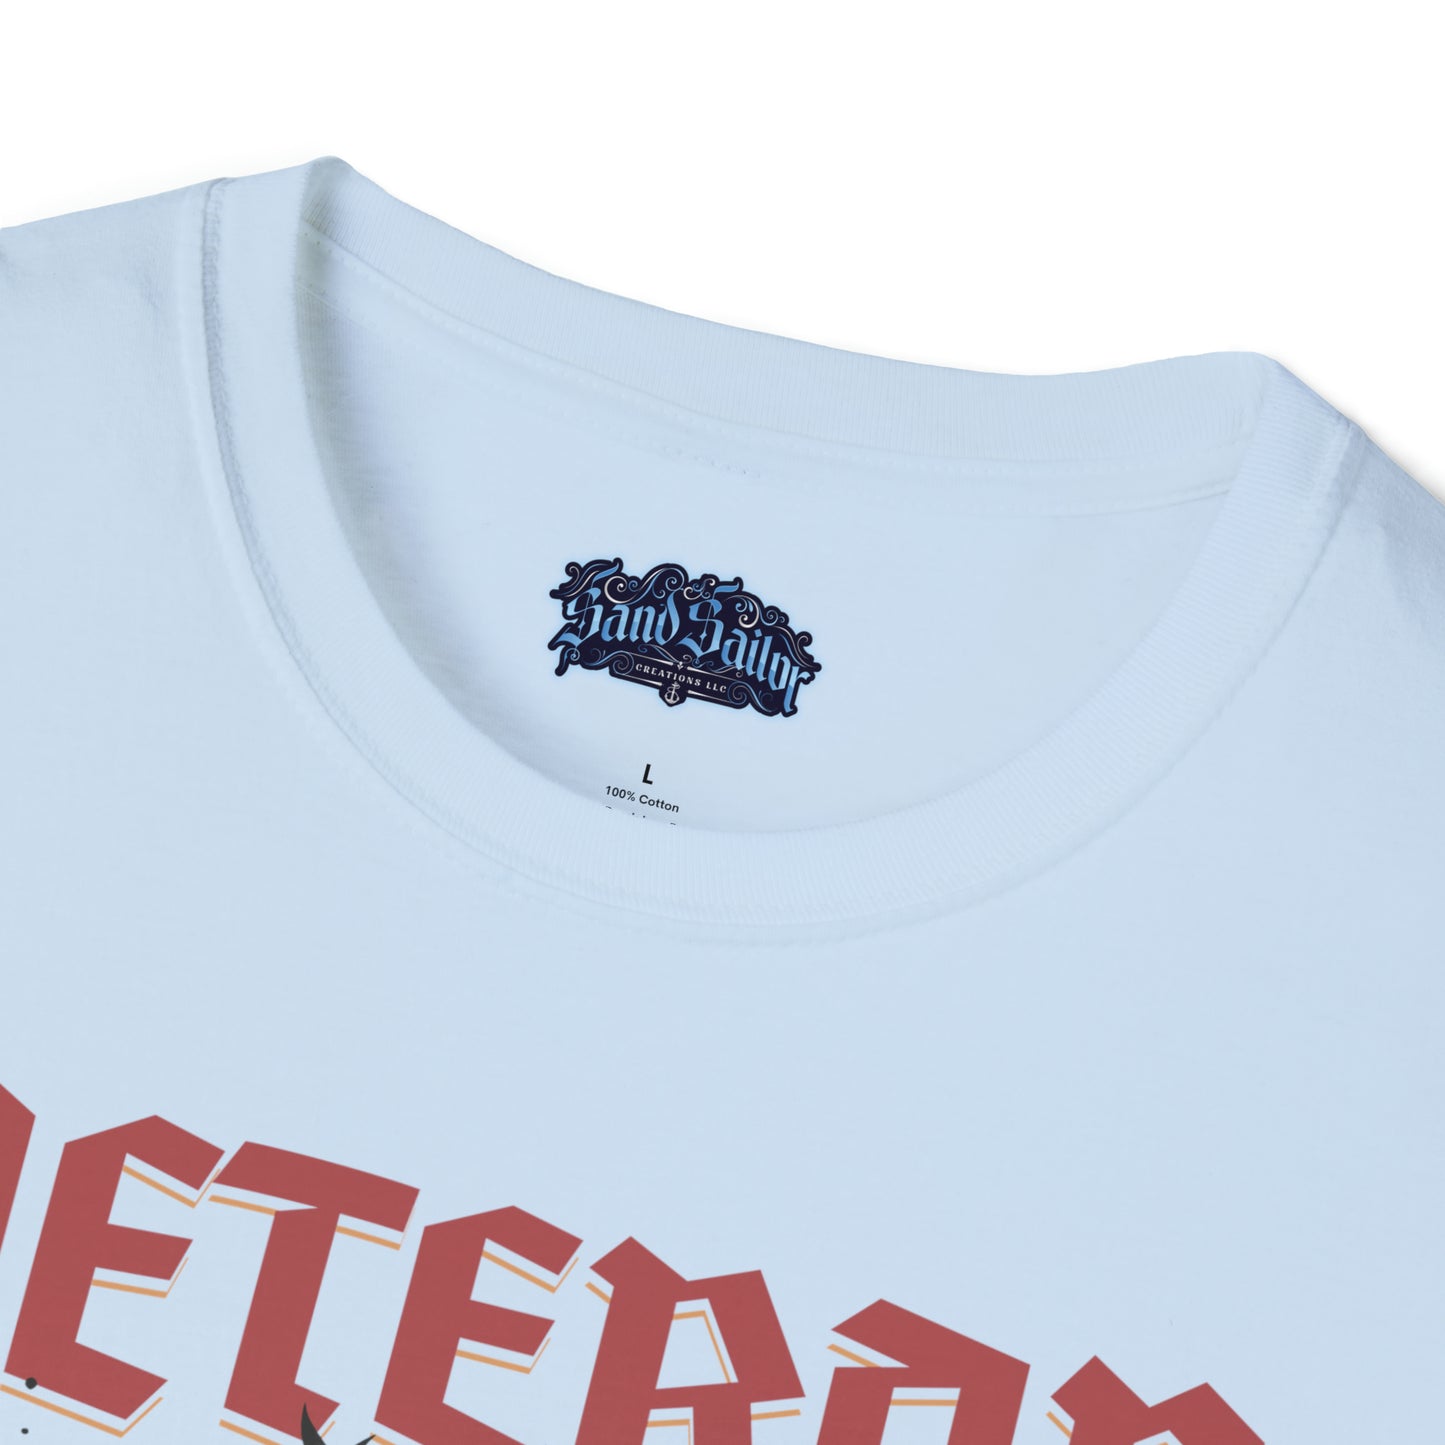 Scarred Veteran Unisex Softstyle T-Shirt